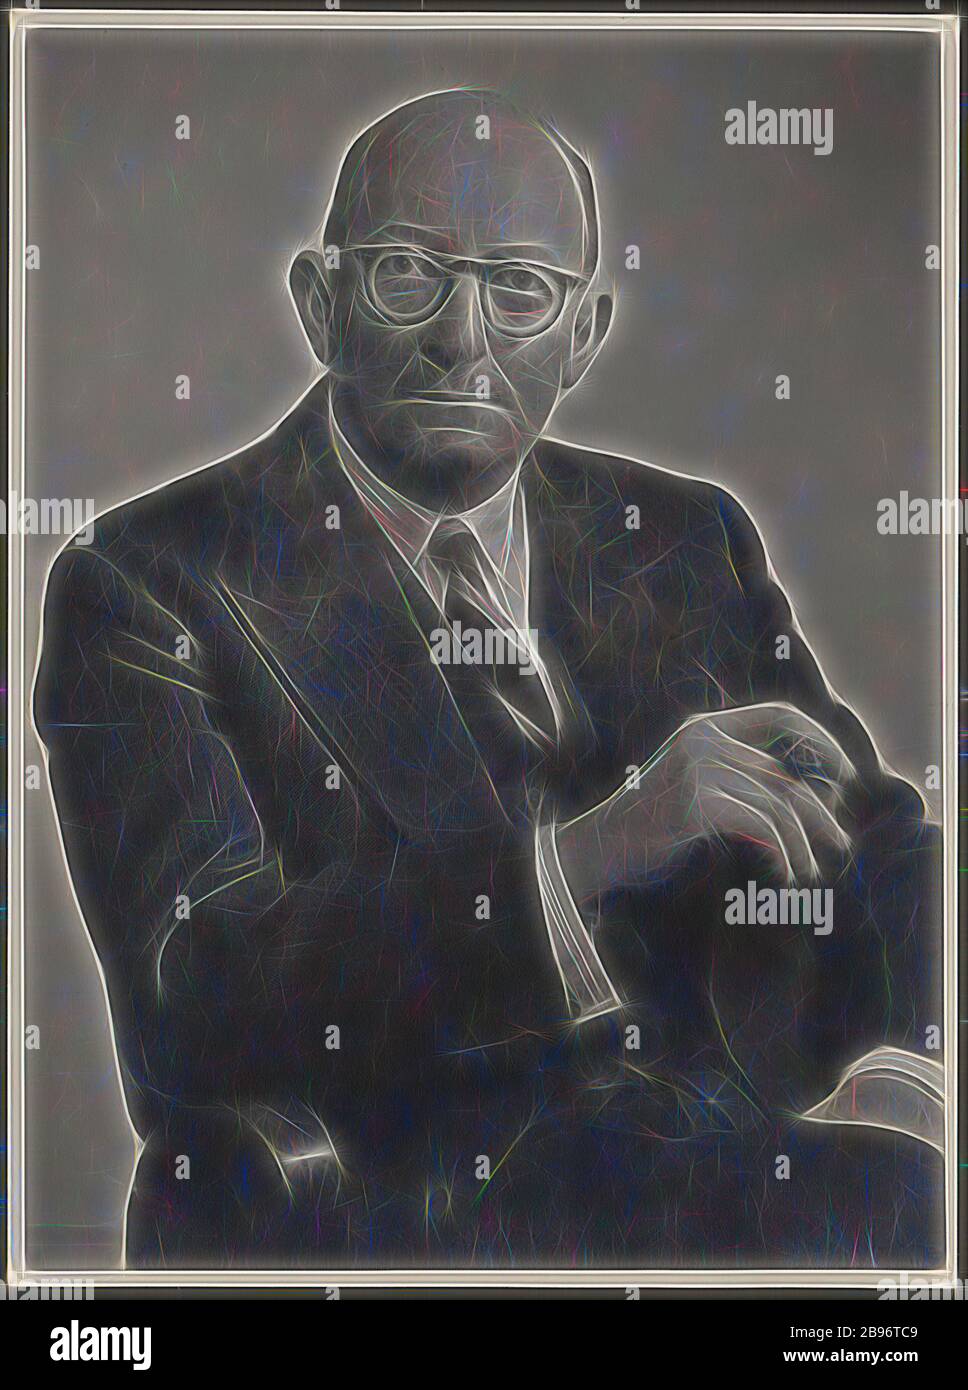 Fotografía, Retrato de Edgar Rouse, 1950, Fotografía en blanco y negro de  un retrato de Edgar Rouse, Presidente de Kodak Australasia Pty Ltd,  Melbourne,1950. Edgar Rouse fue director general de Kodak Australasia,